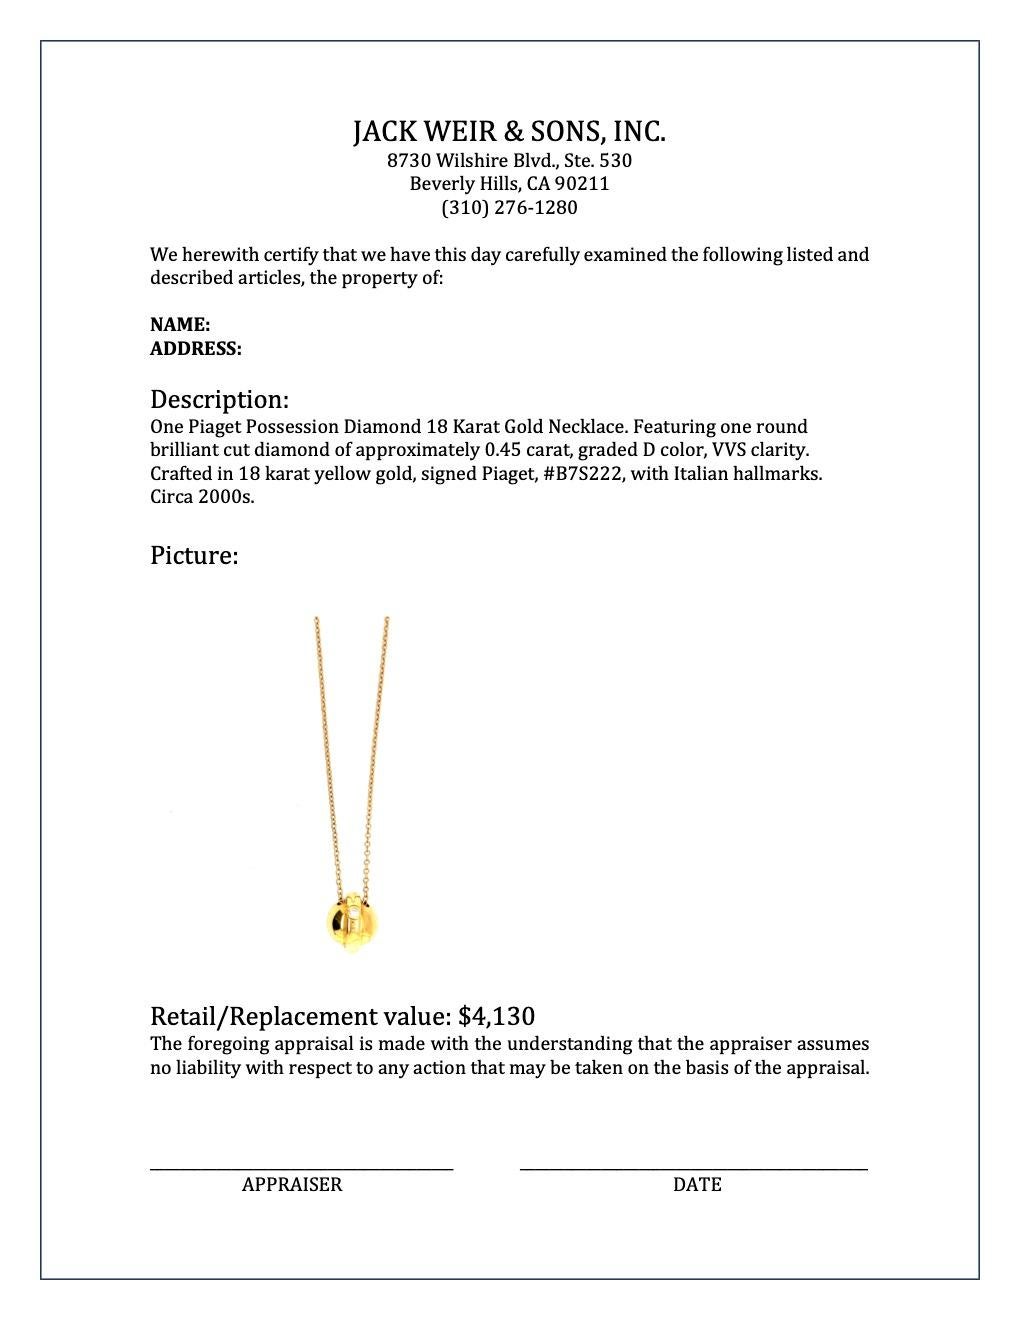 Round Cut Piaget Possession Diamond 18 Karat Gold Necklace